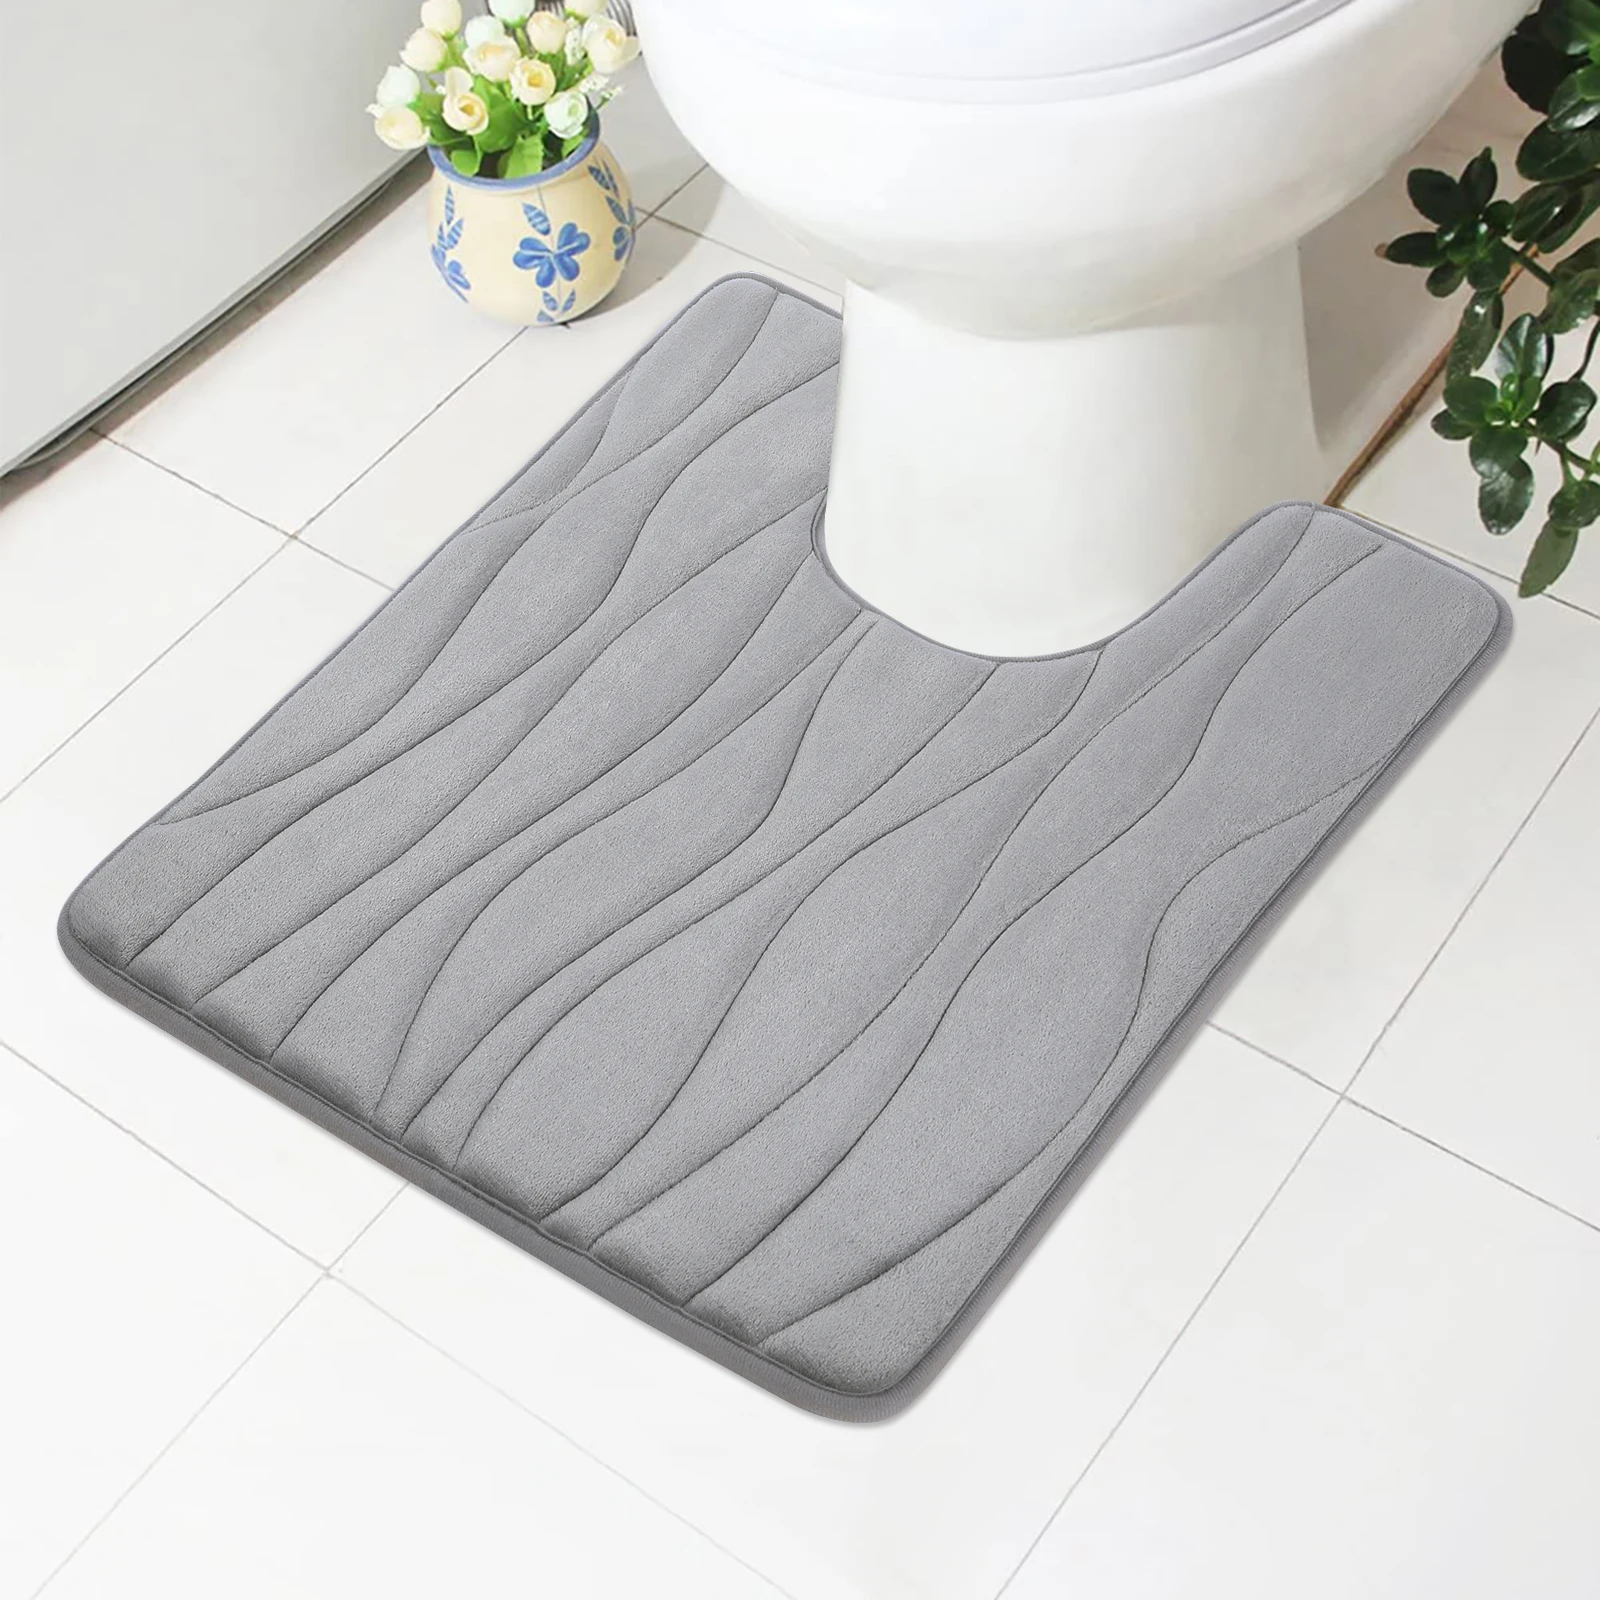 Olanly U-Shaped Bathroom Rug Non-Slip Memory Foam Toilet Pad Soft Coral Fleece Plush Shower Carpet Decoration Absorbent Bath Mat